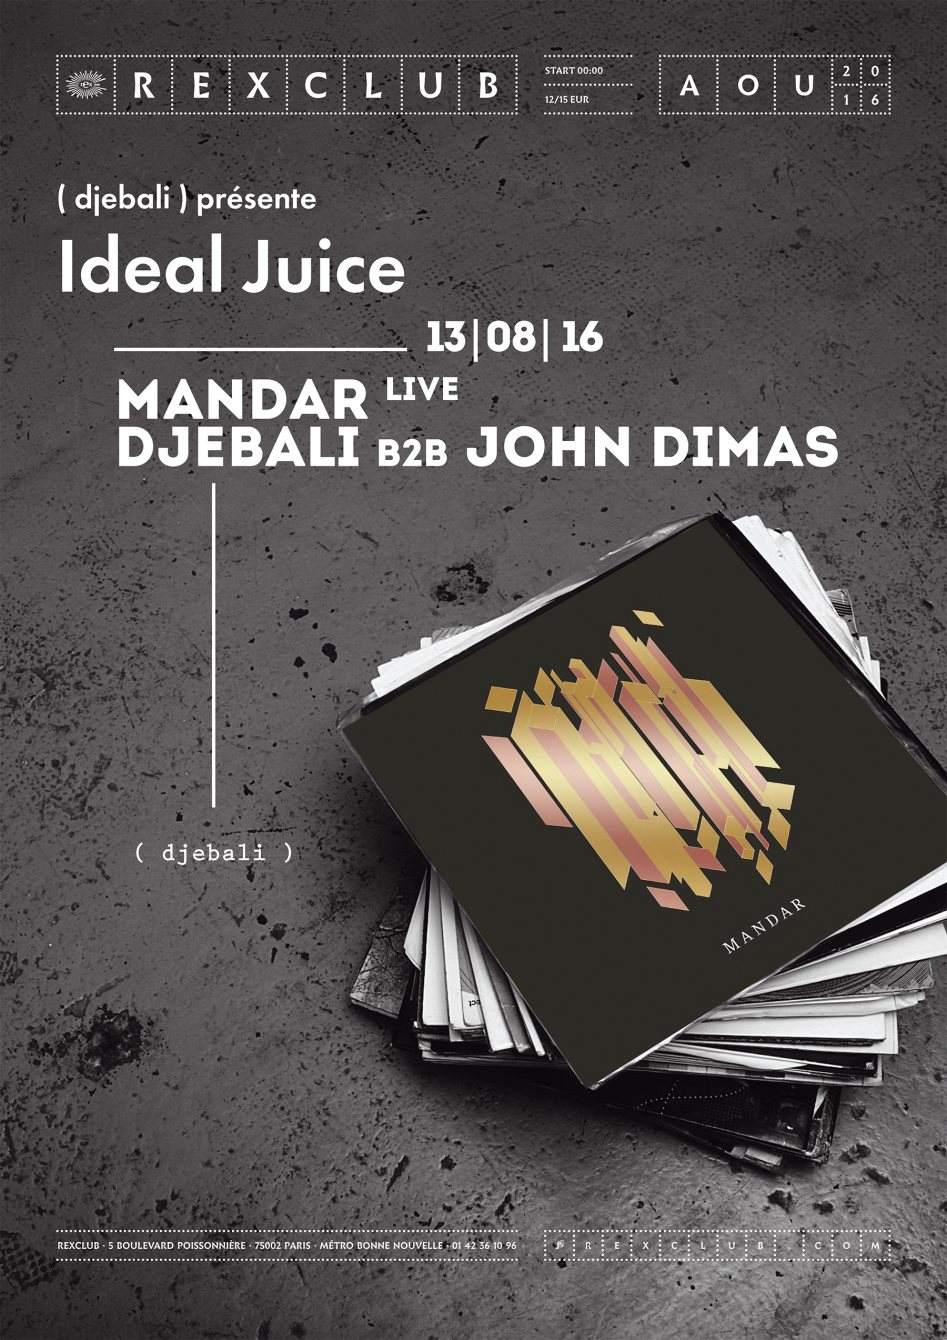 ( Djebali ) Présente Ideal Juice: Mandar Live Djebali b2b John Dimas - フライヤー表